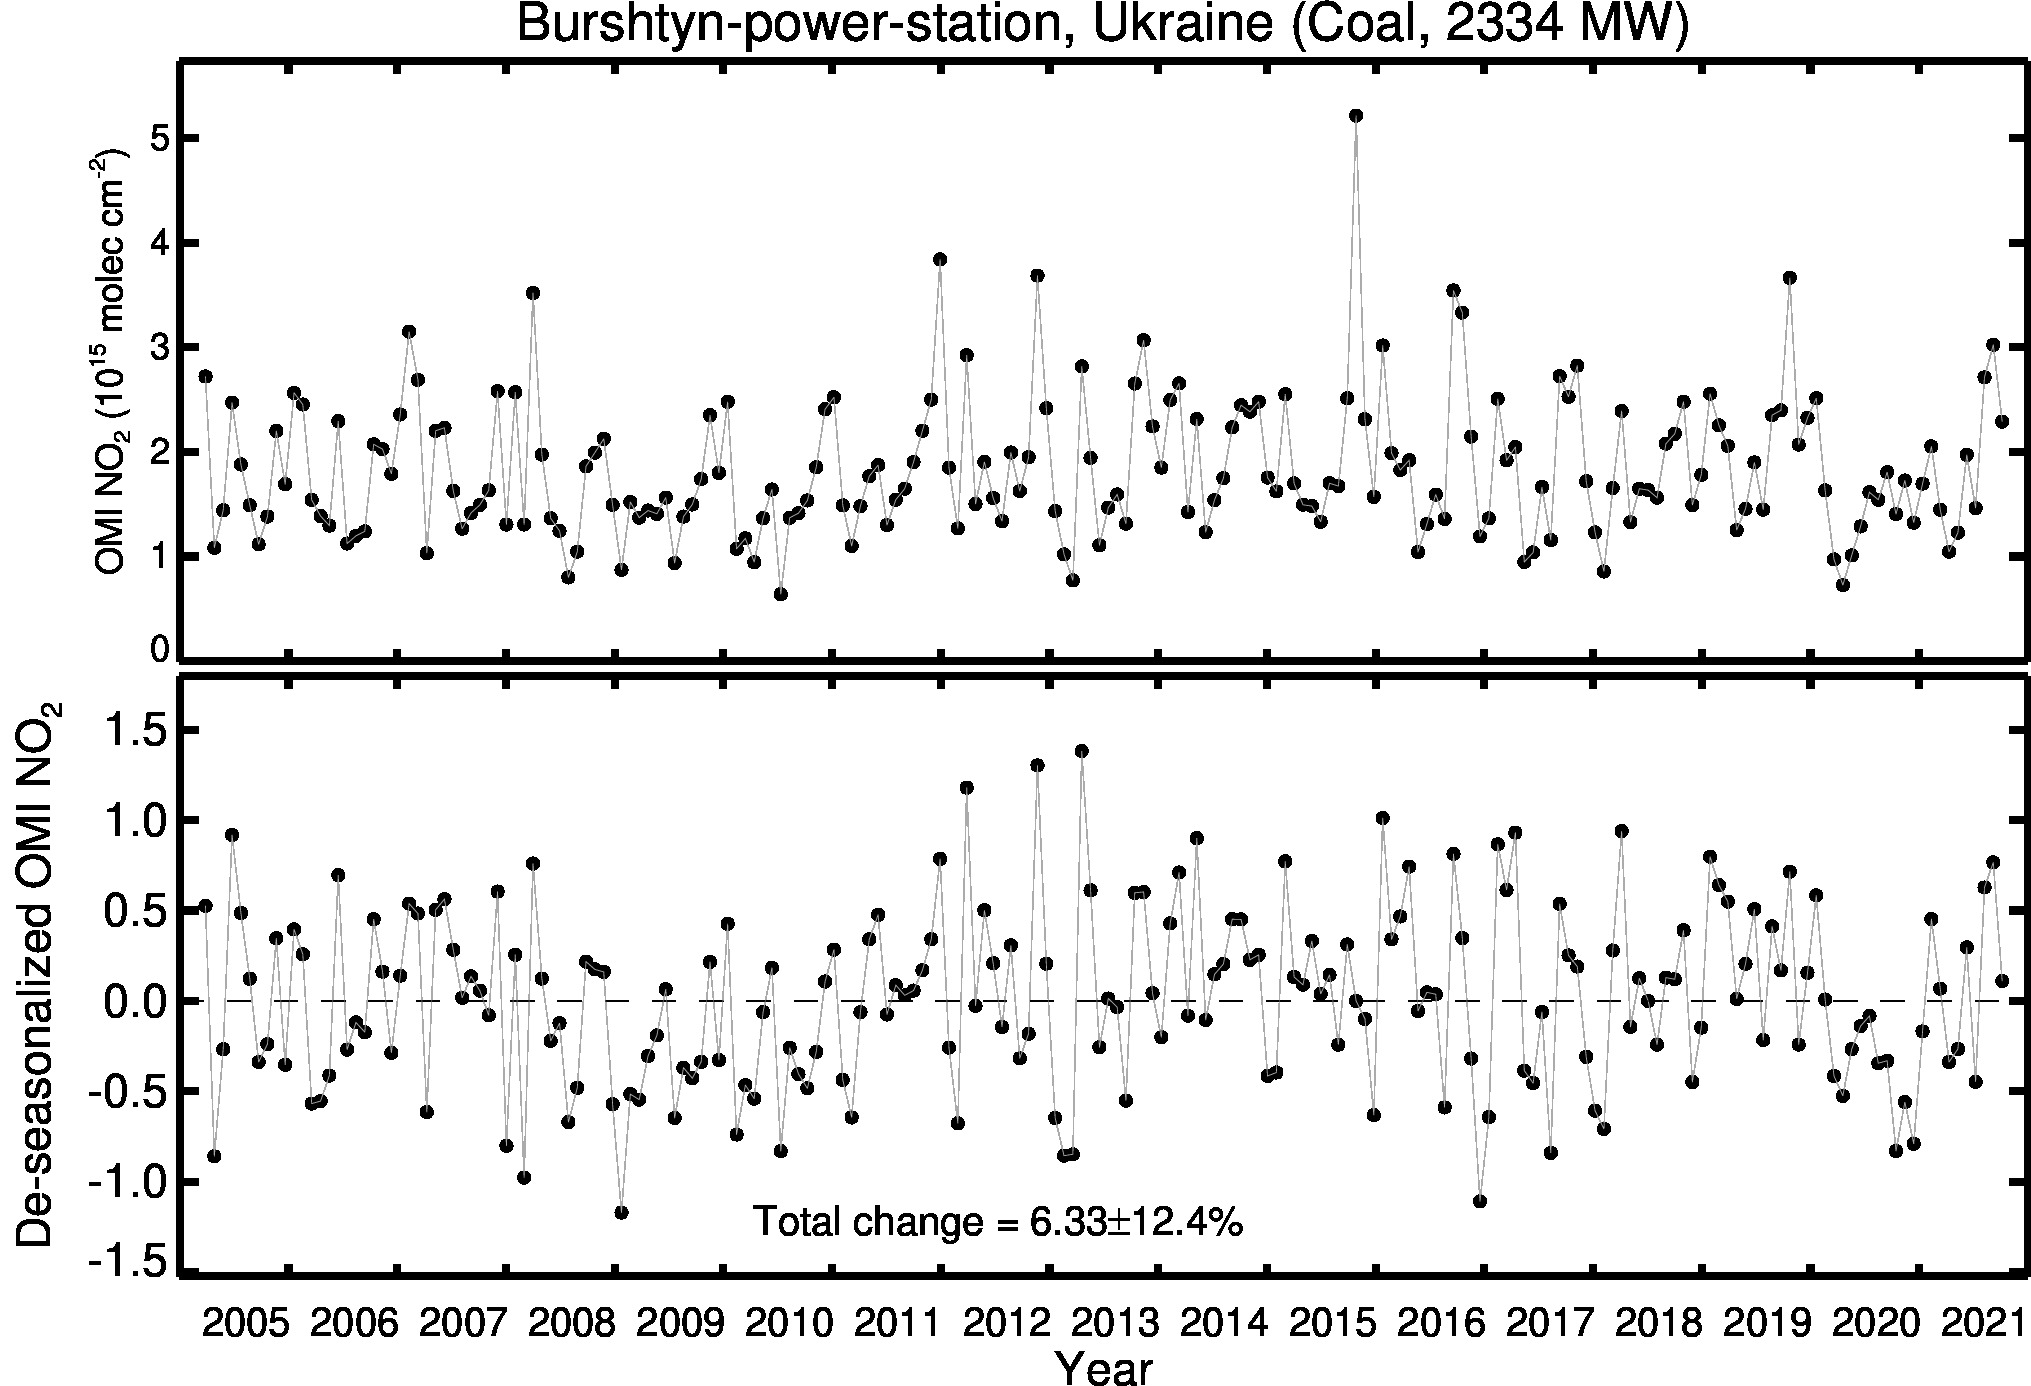 Burshtyn power station Line Plot 2005-2021